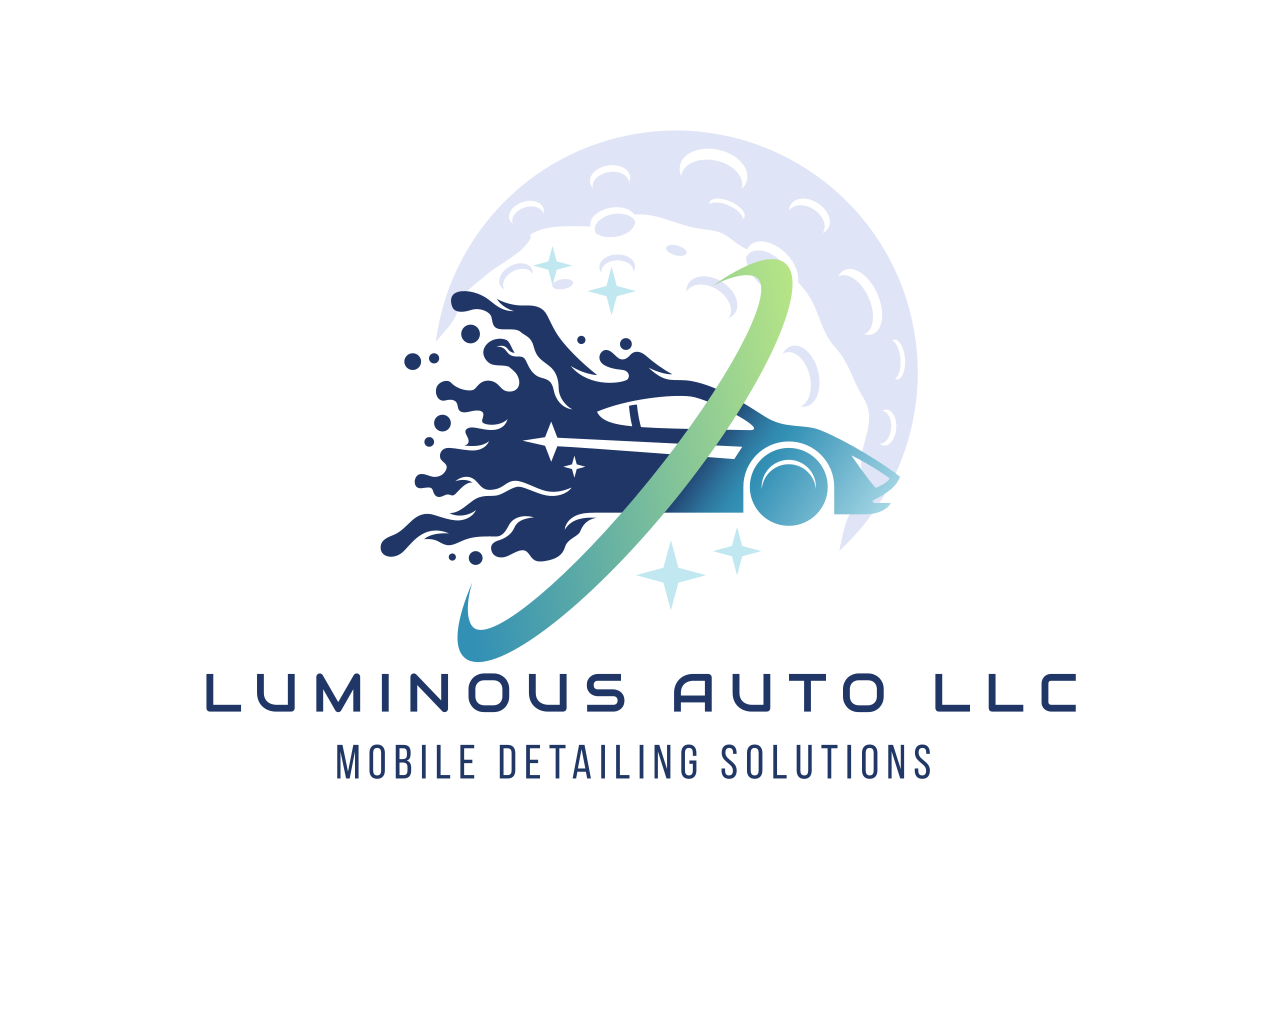 Luminous Auto LLC